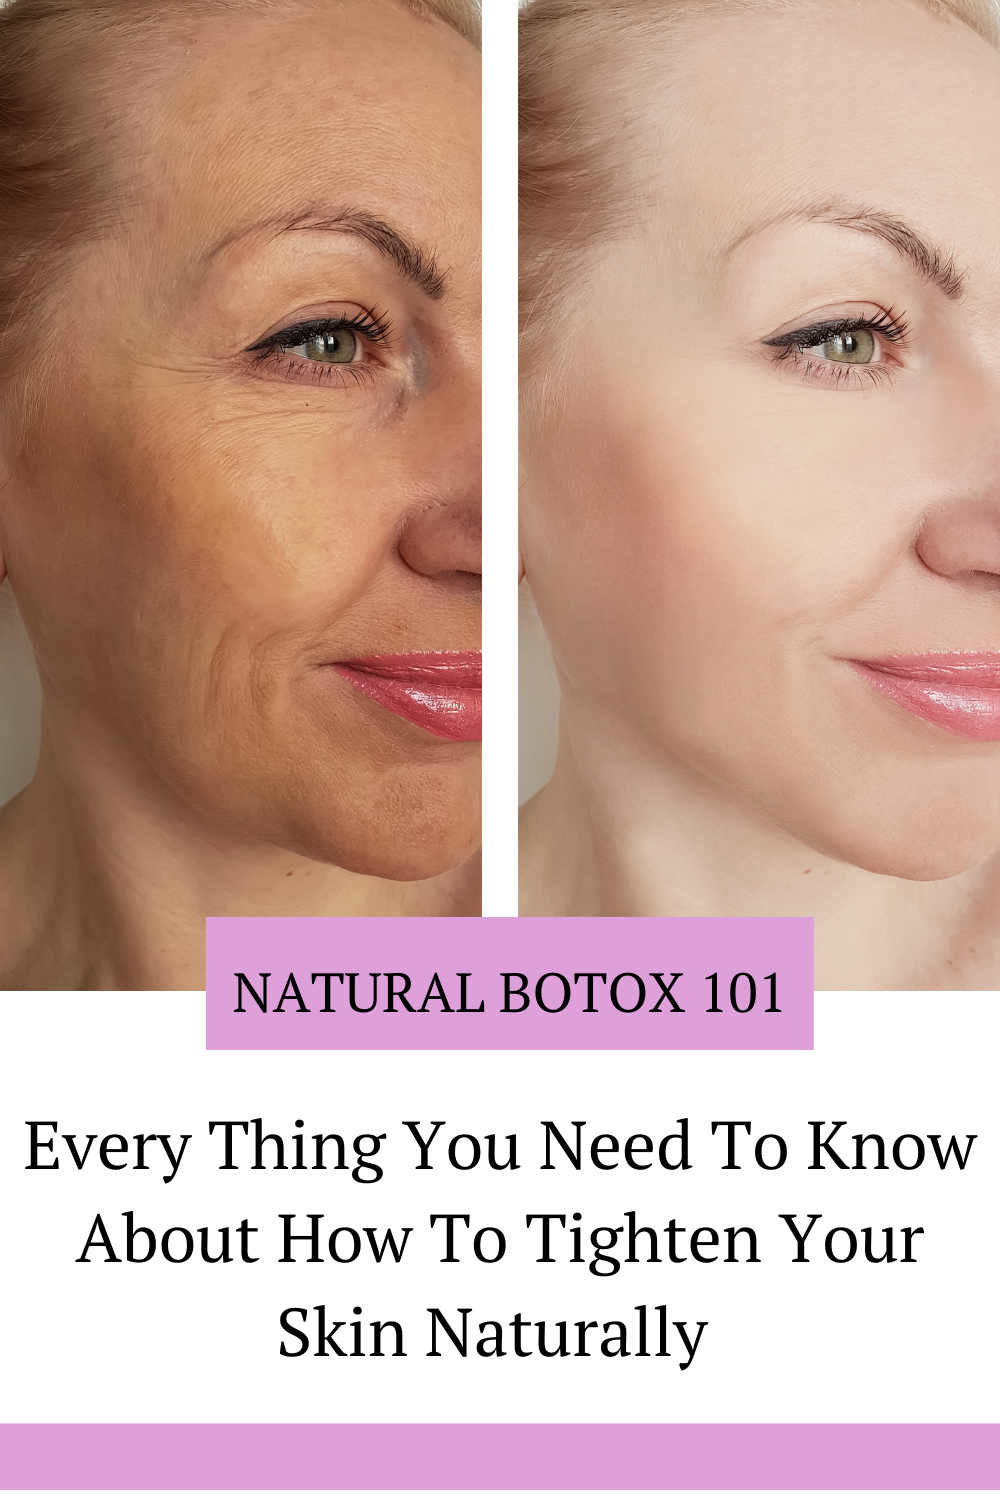 Botox Without The Needle